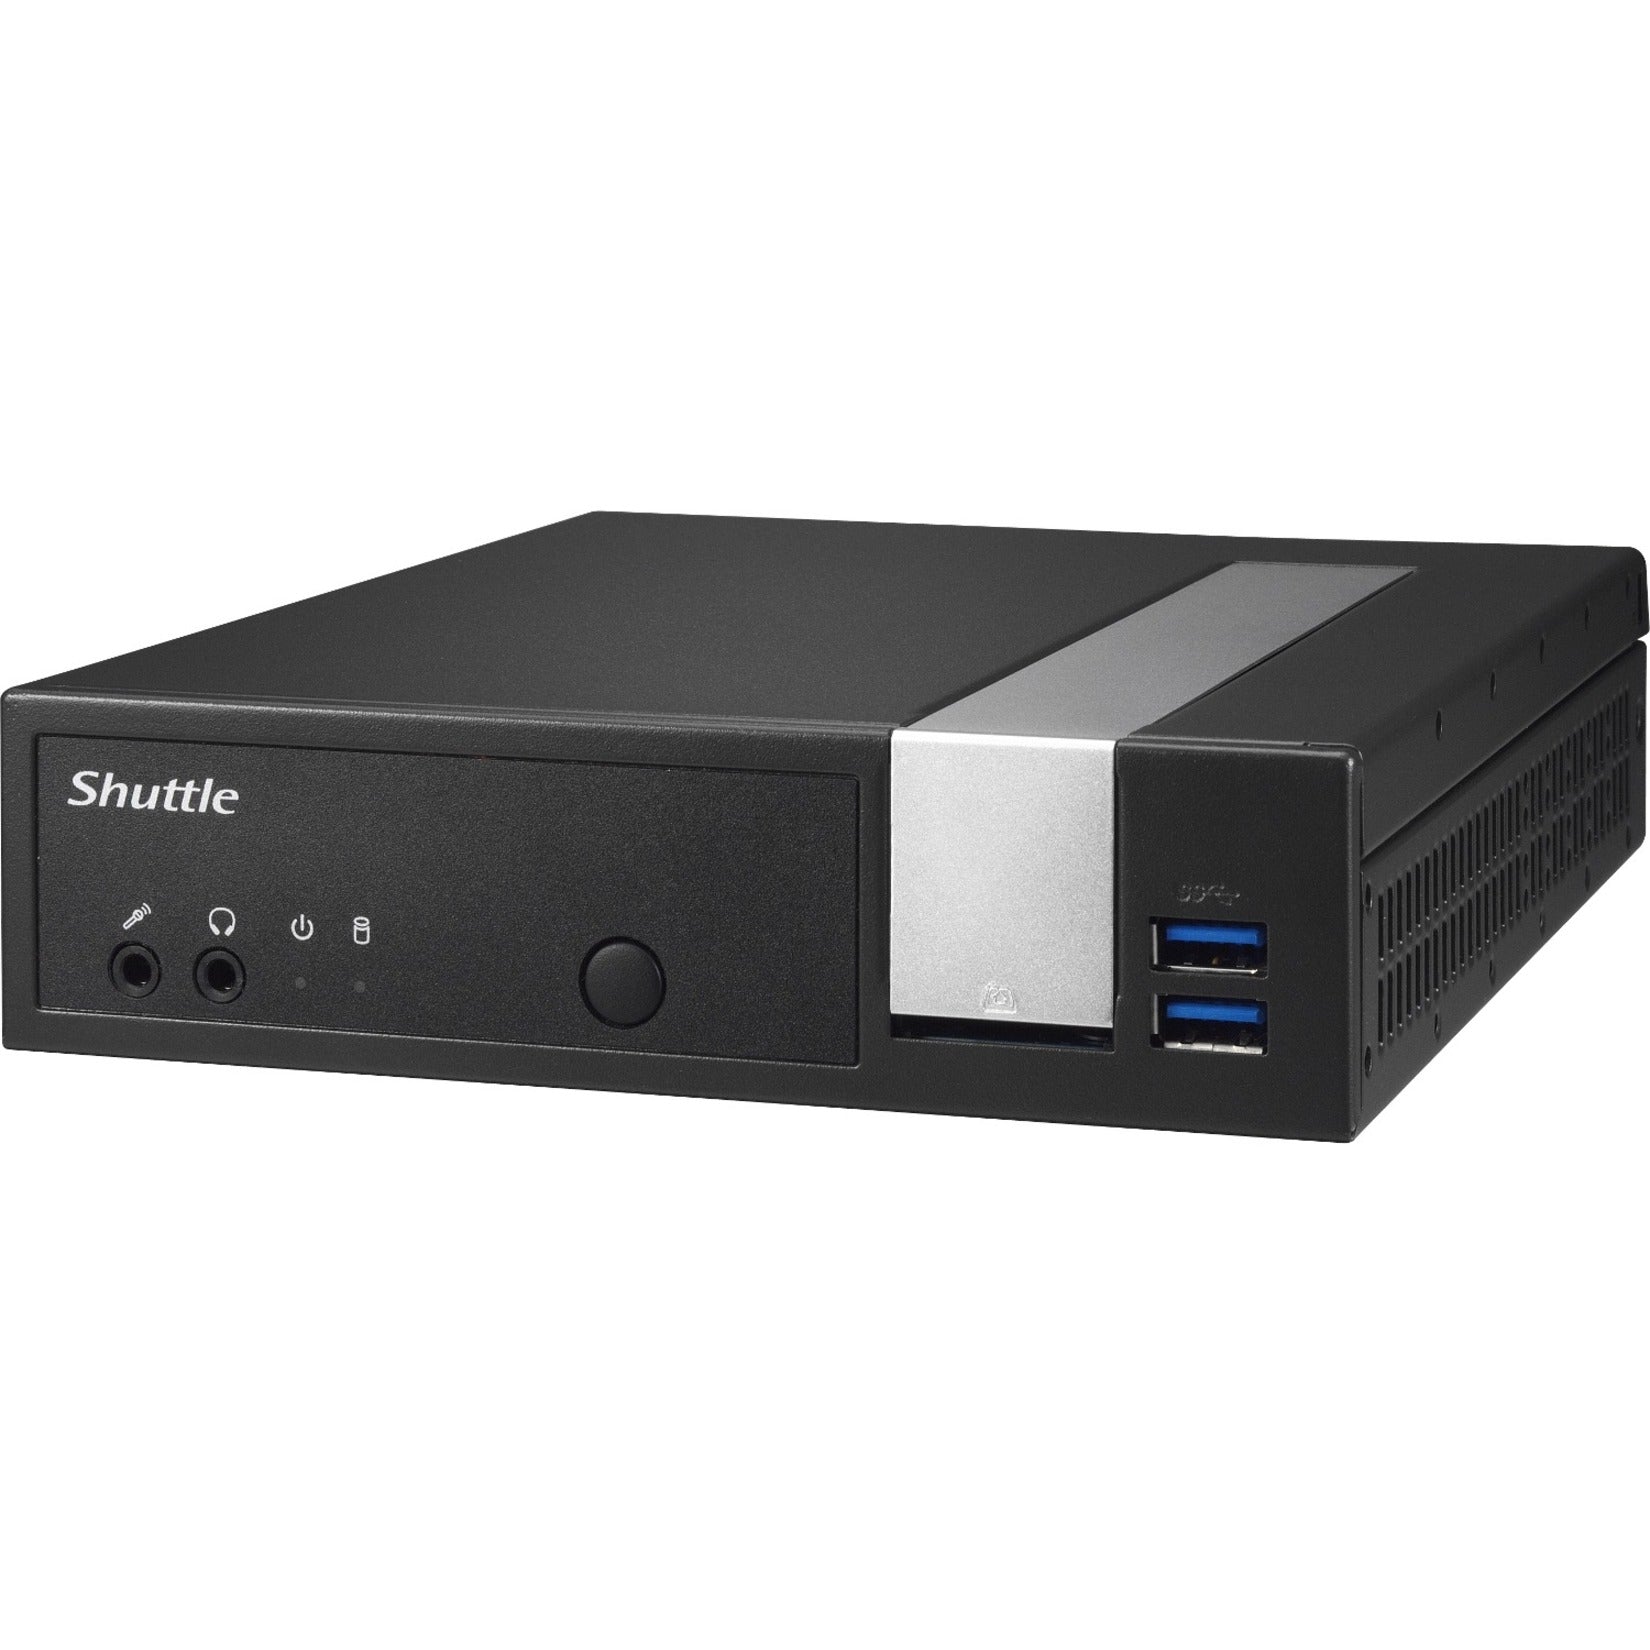 Shuttle DL10J XPC slim Barebone System - Intel Celeron J4005, 3 Year Warranty, DDR4 SDRAM, HDMI, VGA, DisplayPort, 6 USB Ports, UHD Graphics 600, Wireless LAN